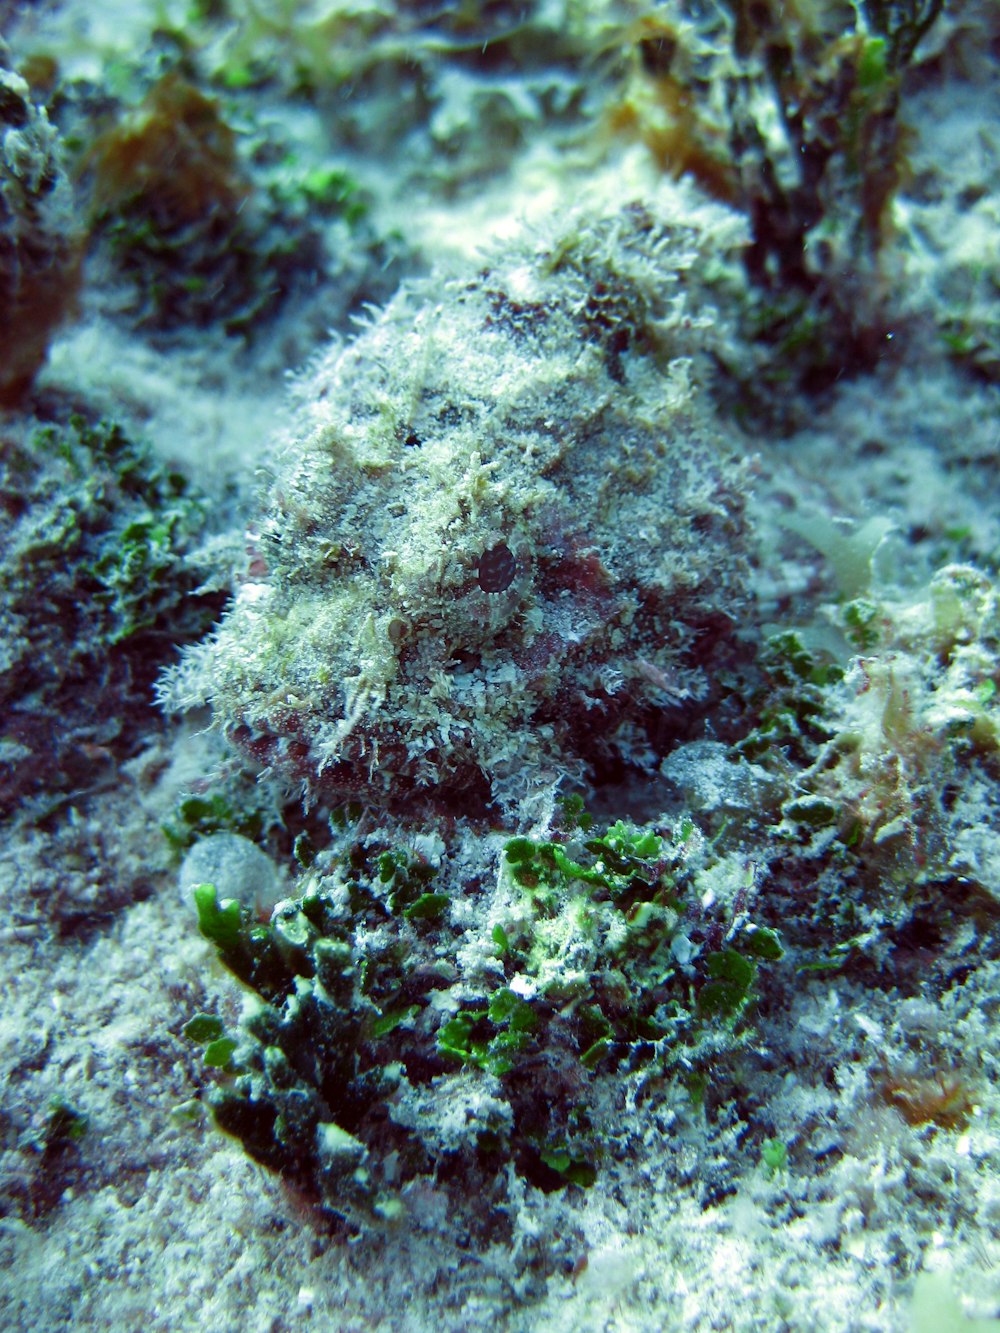 récif corallien vert et brun